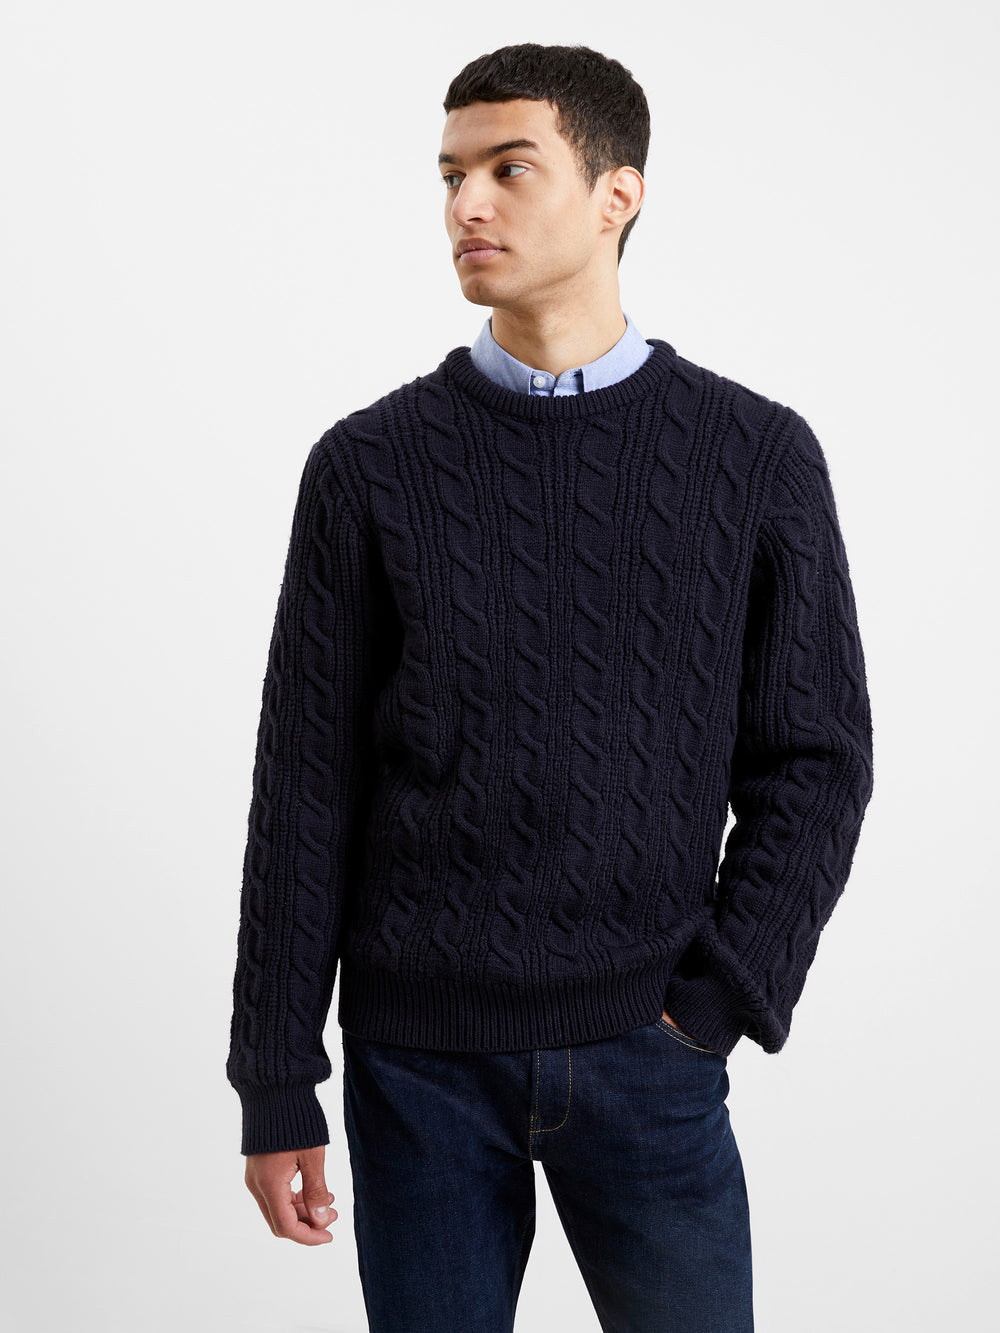 Soft Cable Knit Crewneck Sweater Dark Navy